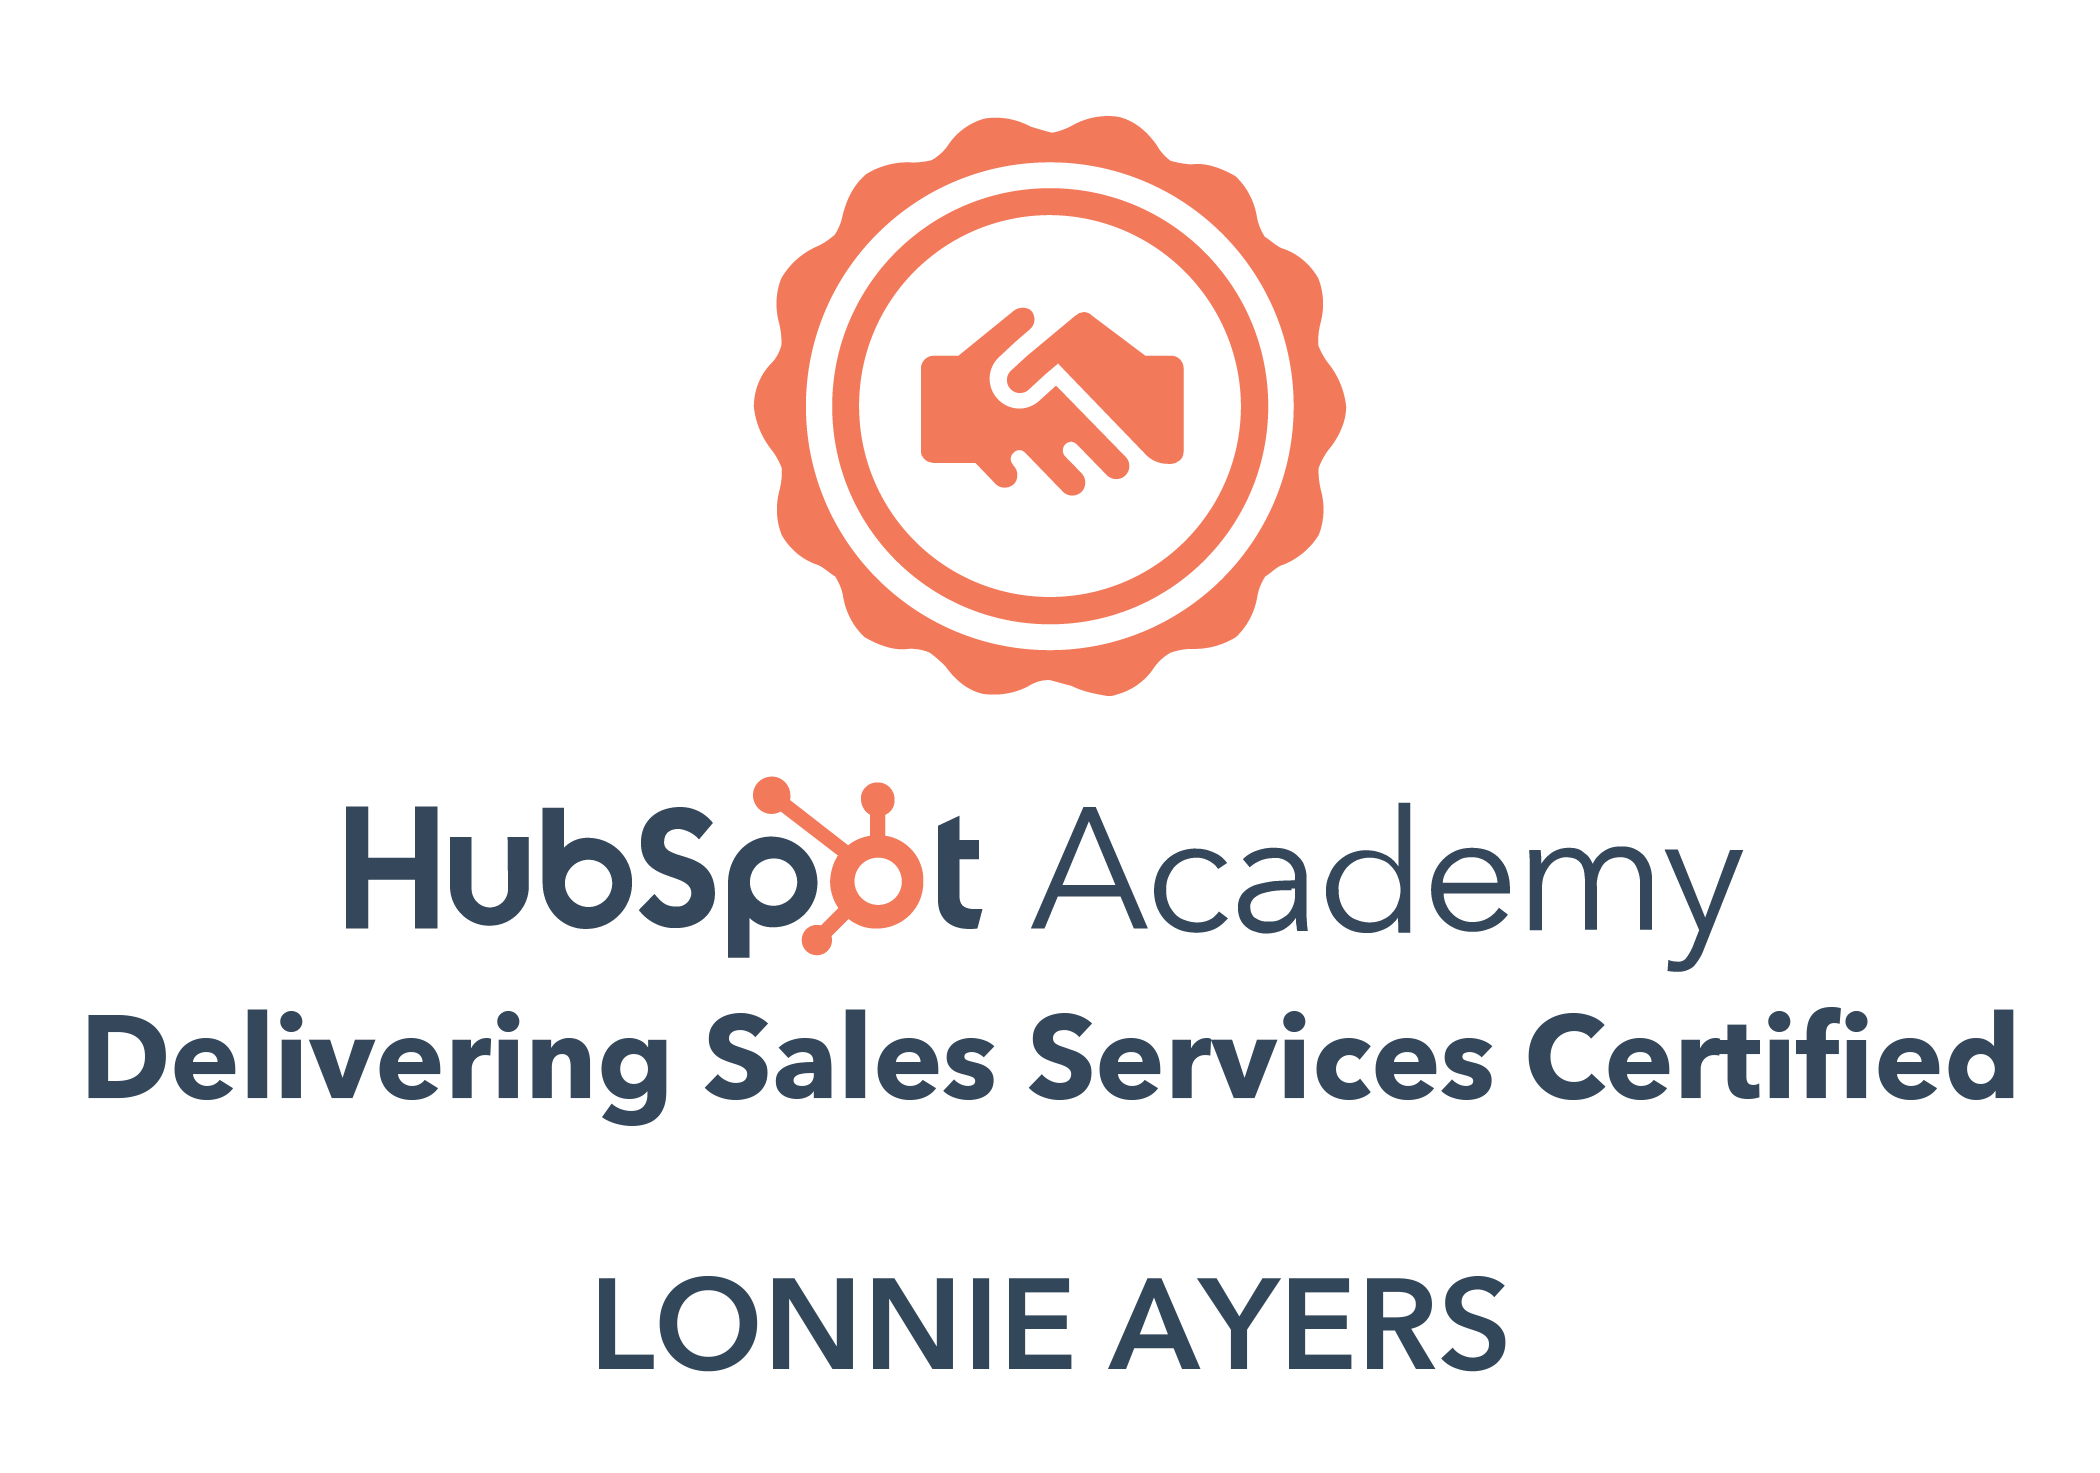 Delivering Sales Services Certified